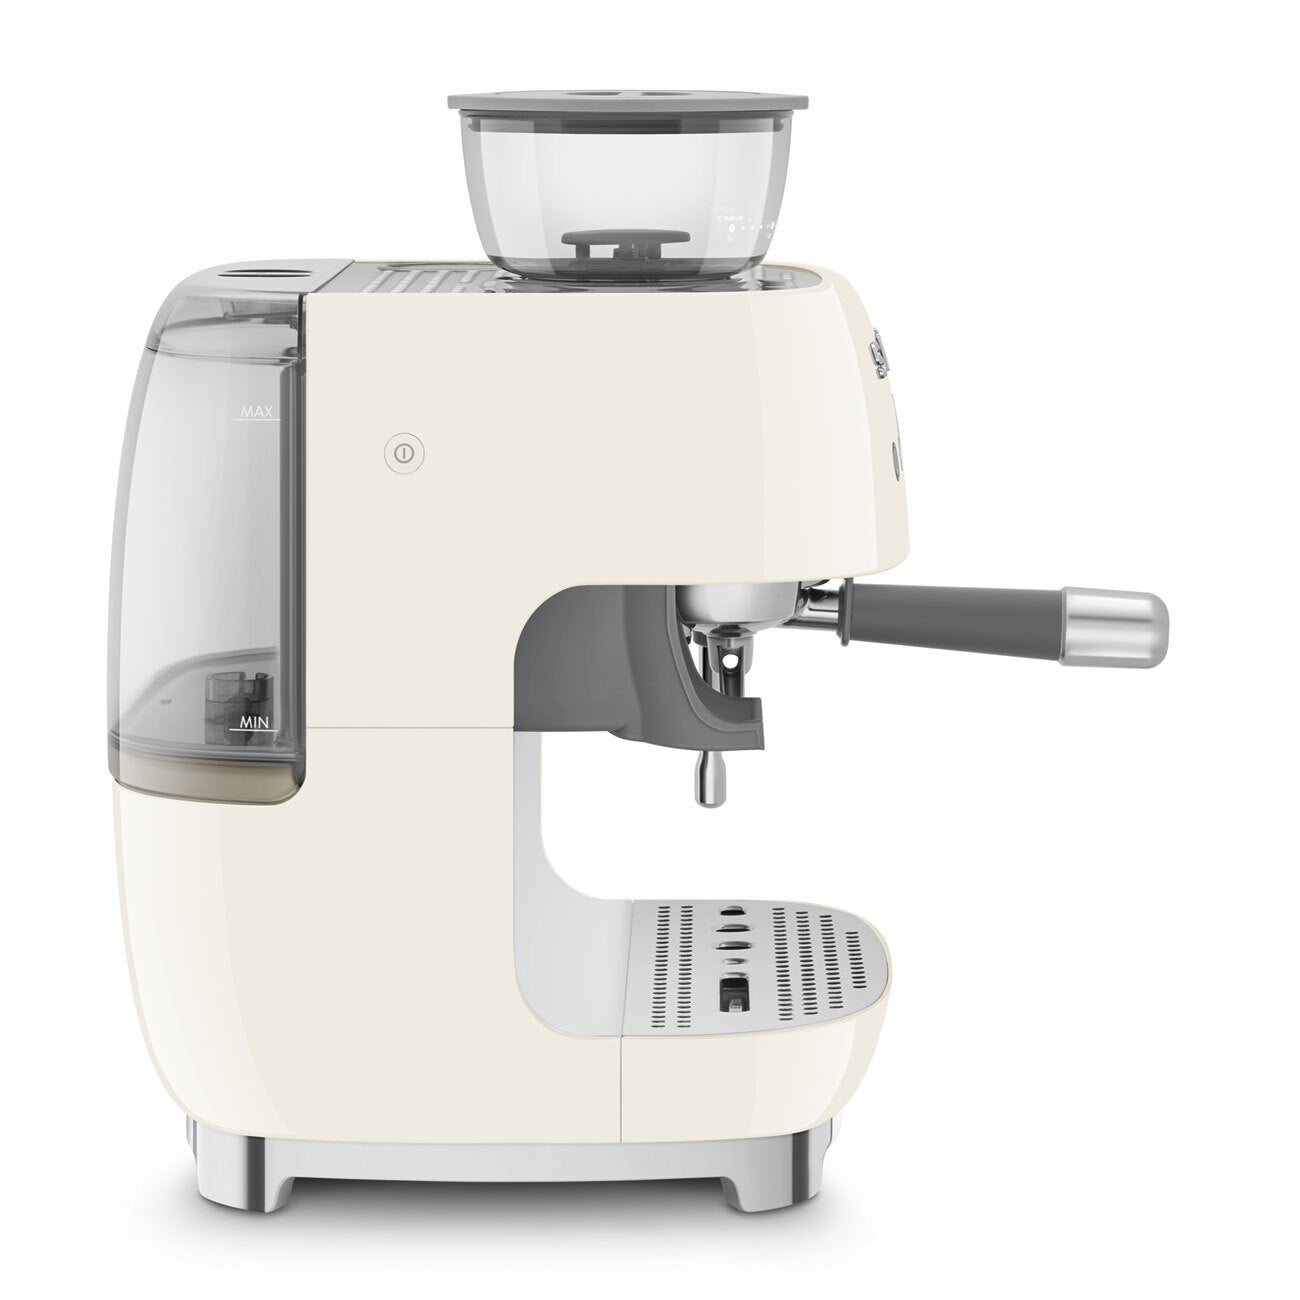 SMEG Manual Espresso Coffee Machine with Grinder, Retro Style Cream